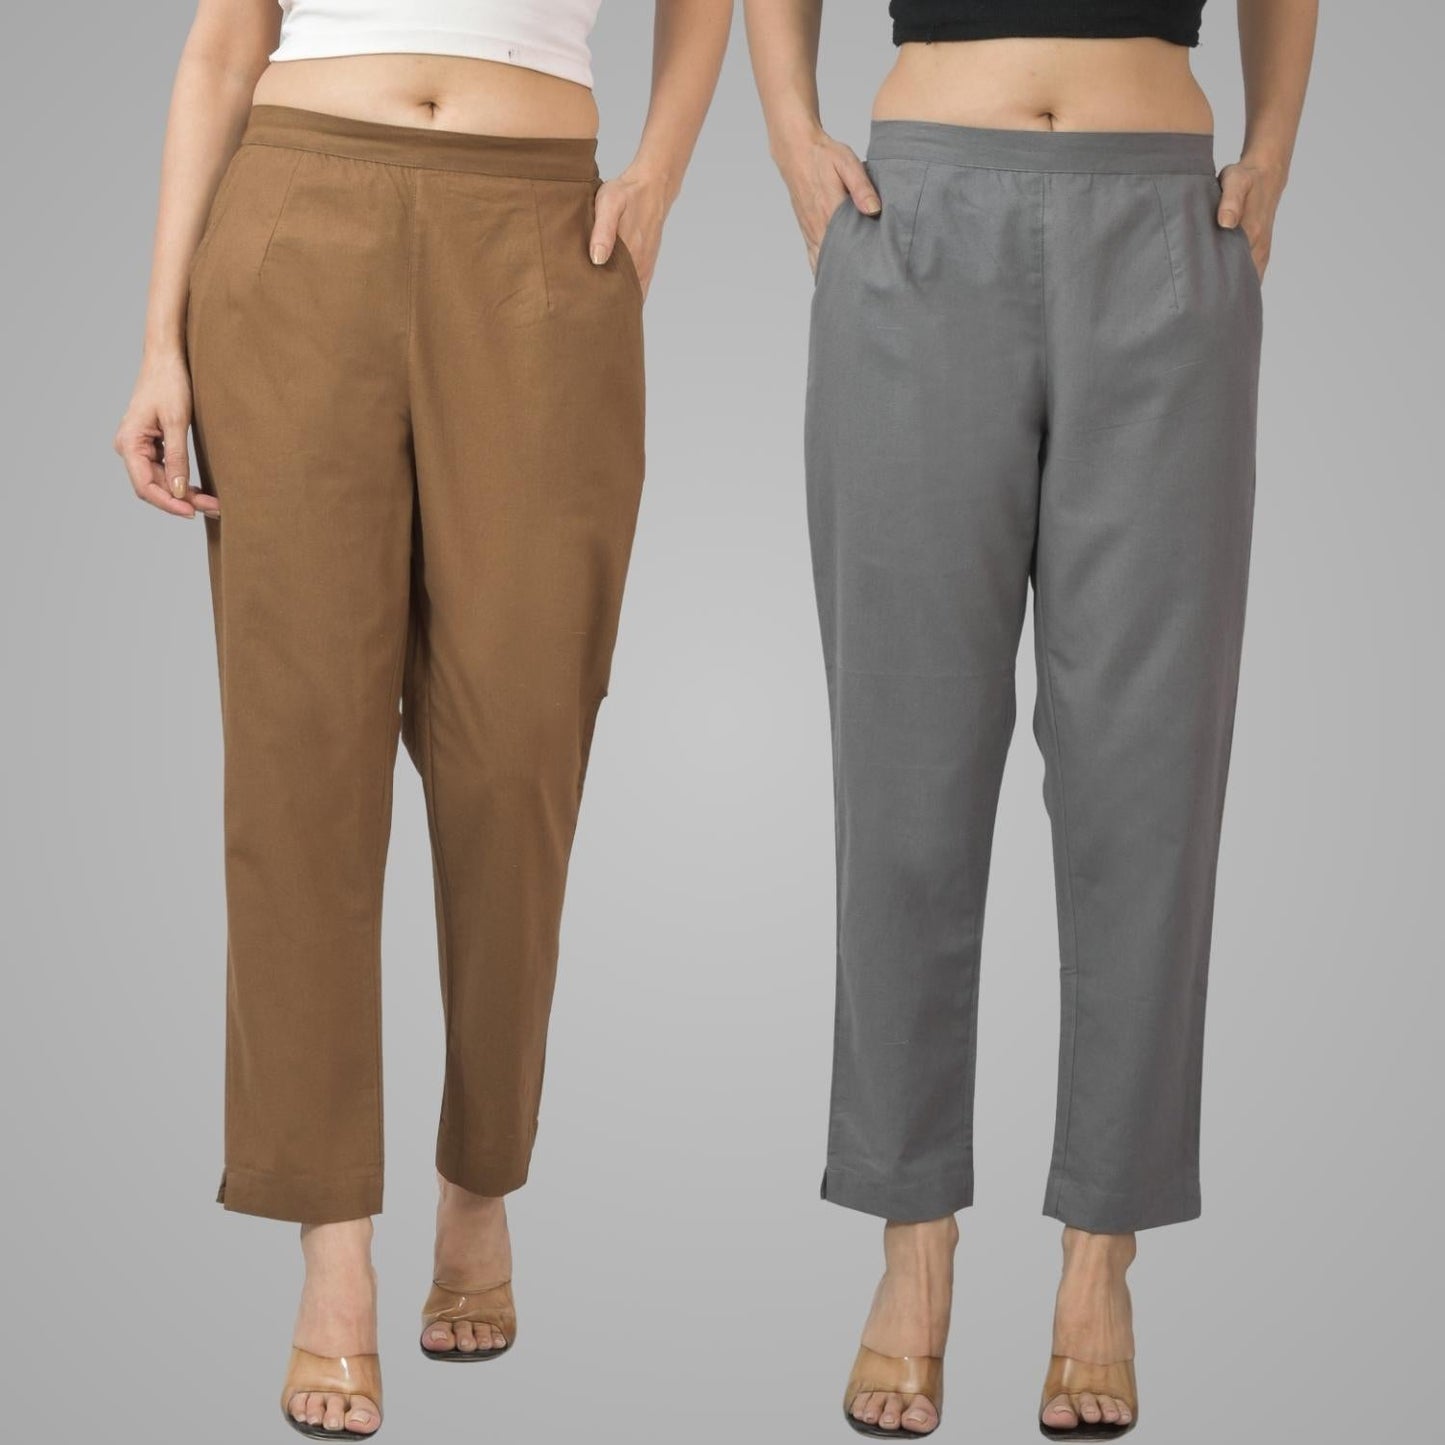 Pack Of 2 Womens Half Elastic Brown And Grey Deep Pocket Cotton Pants